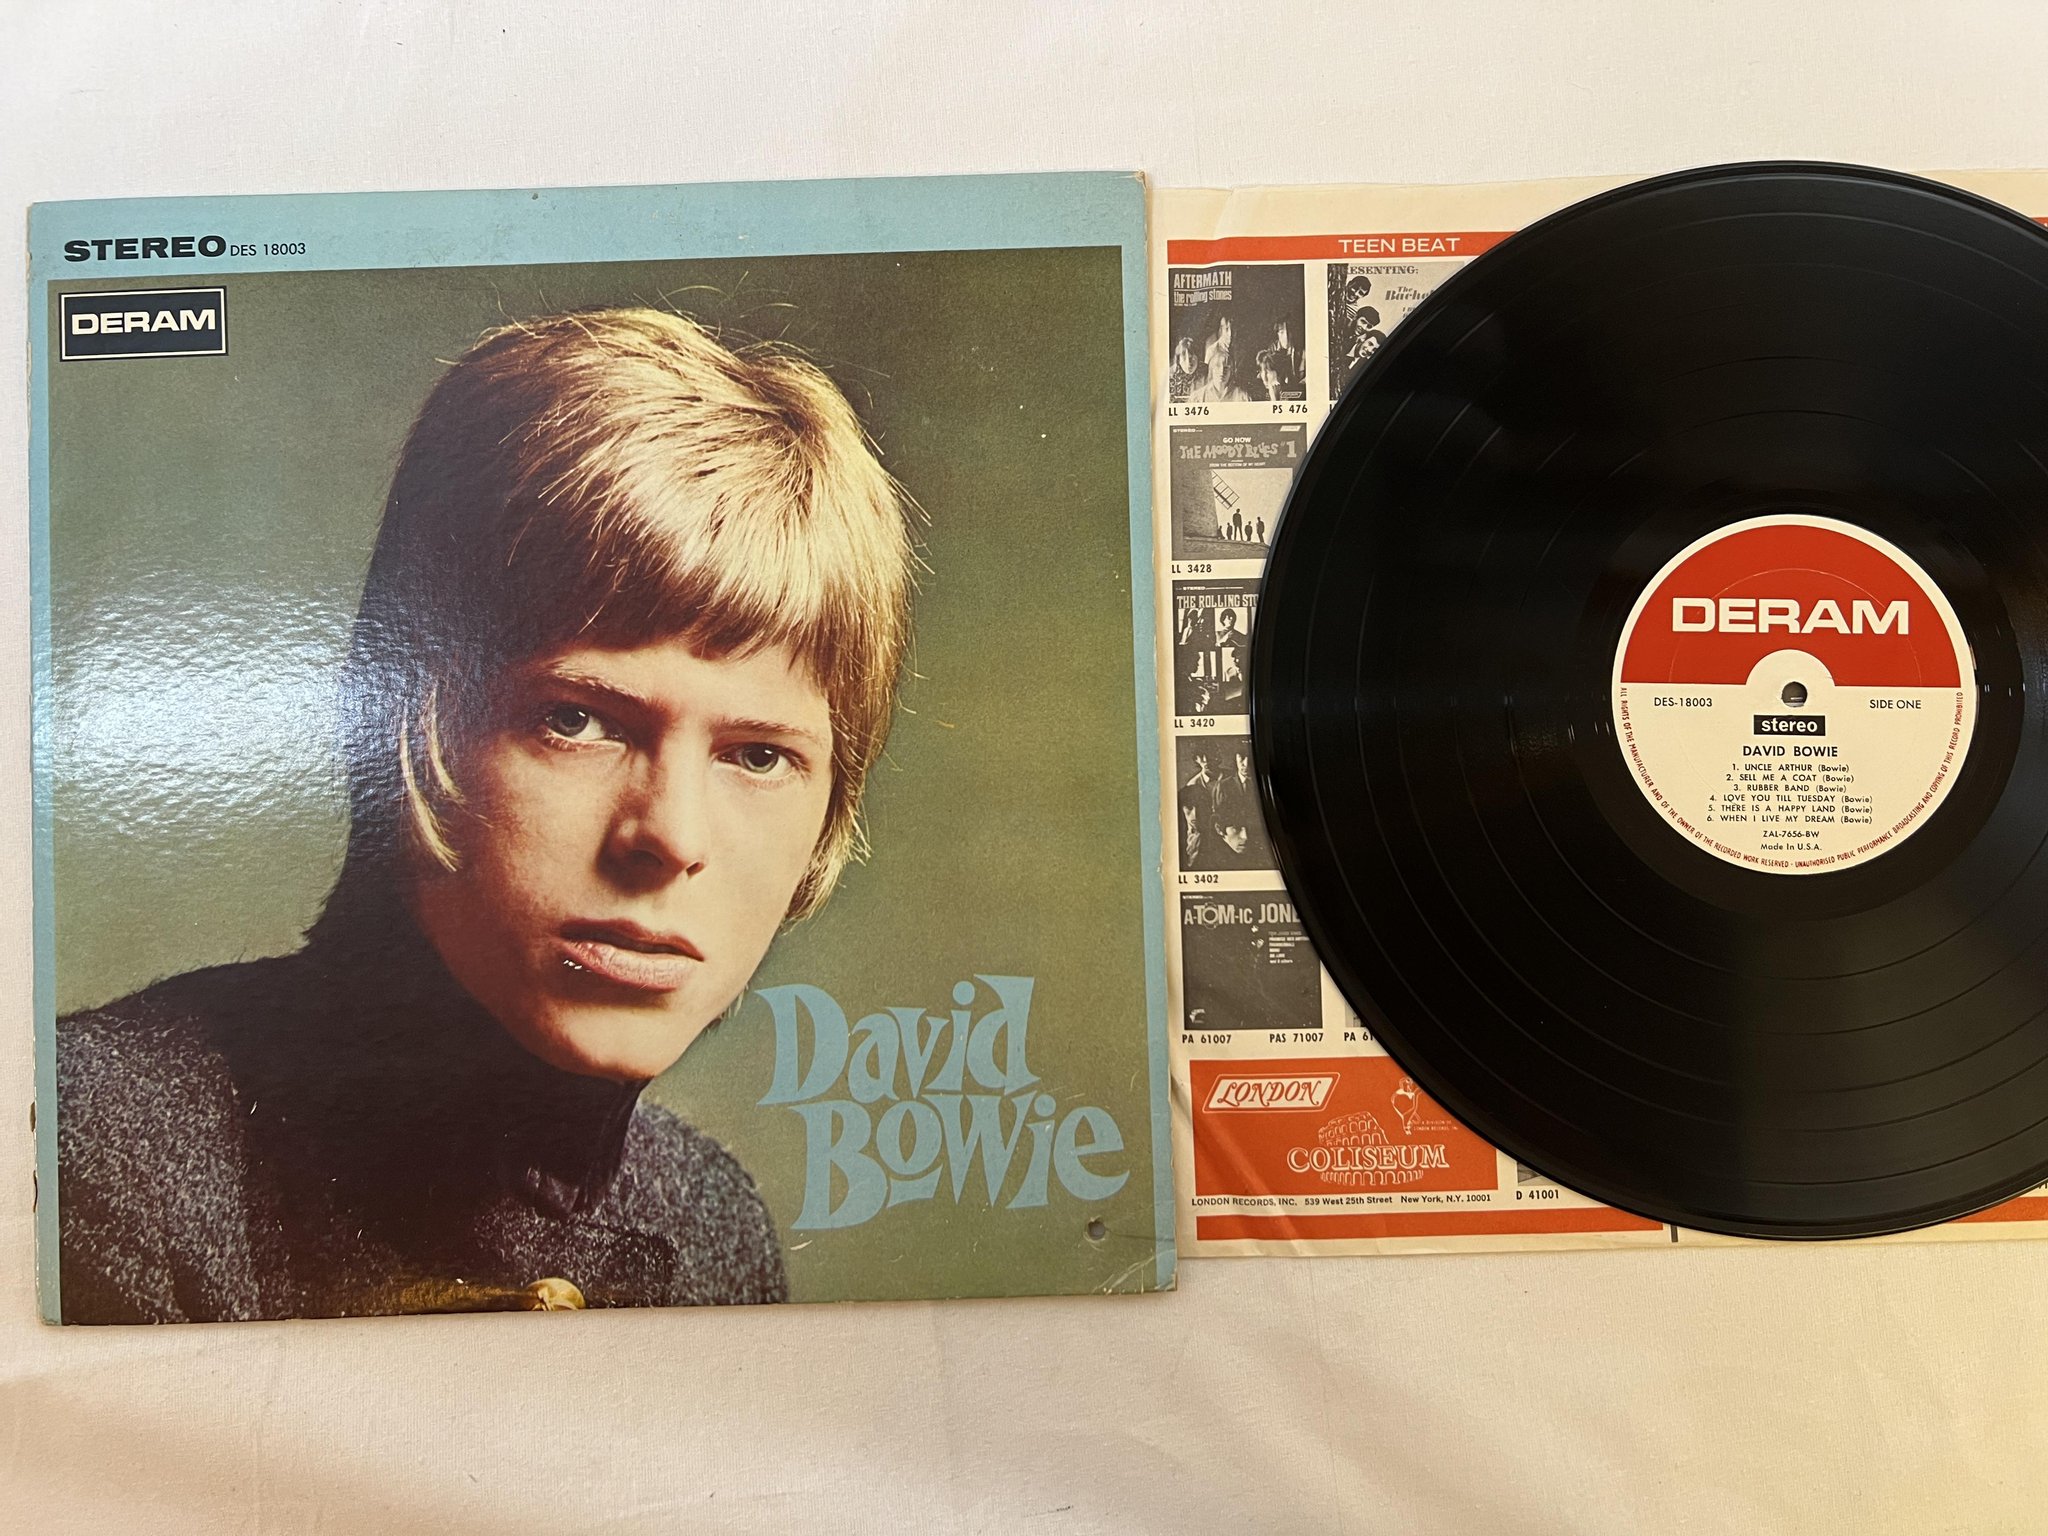 Omslagsbild för skivan DAVID BOWIE s/t LP -67 US DERAM DES 18003 *** Mega Rare ***